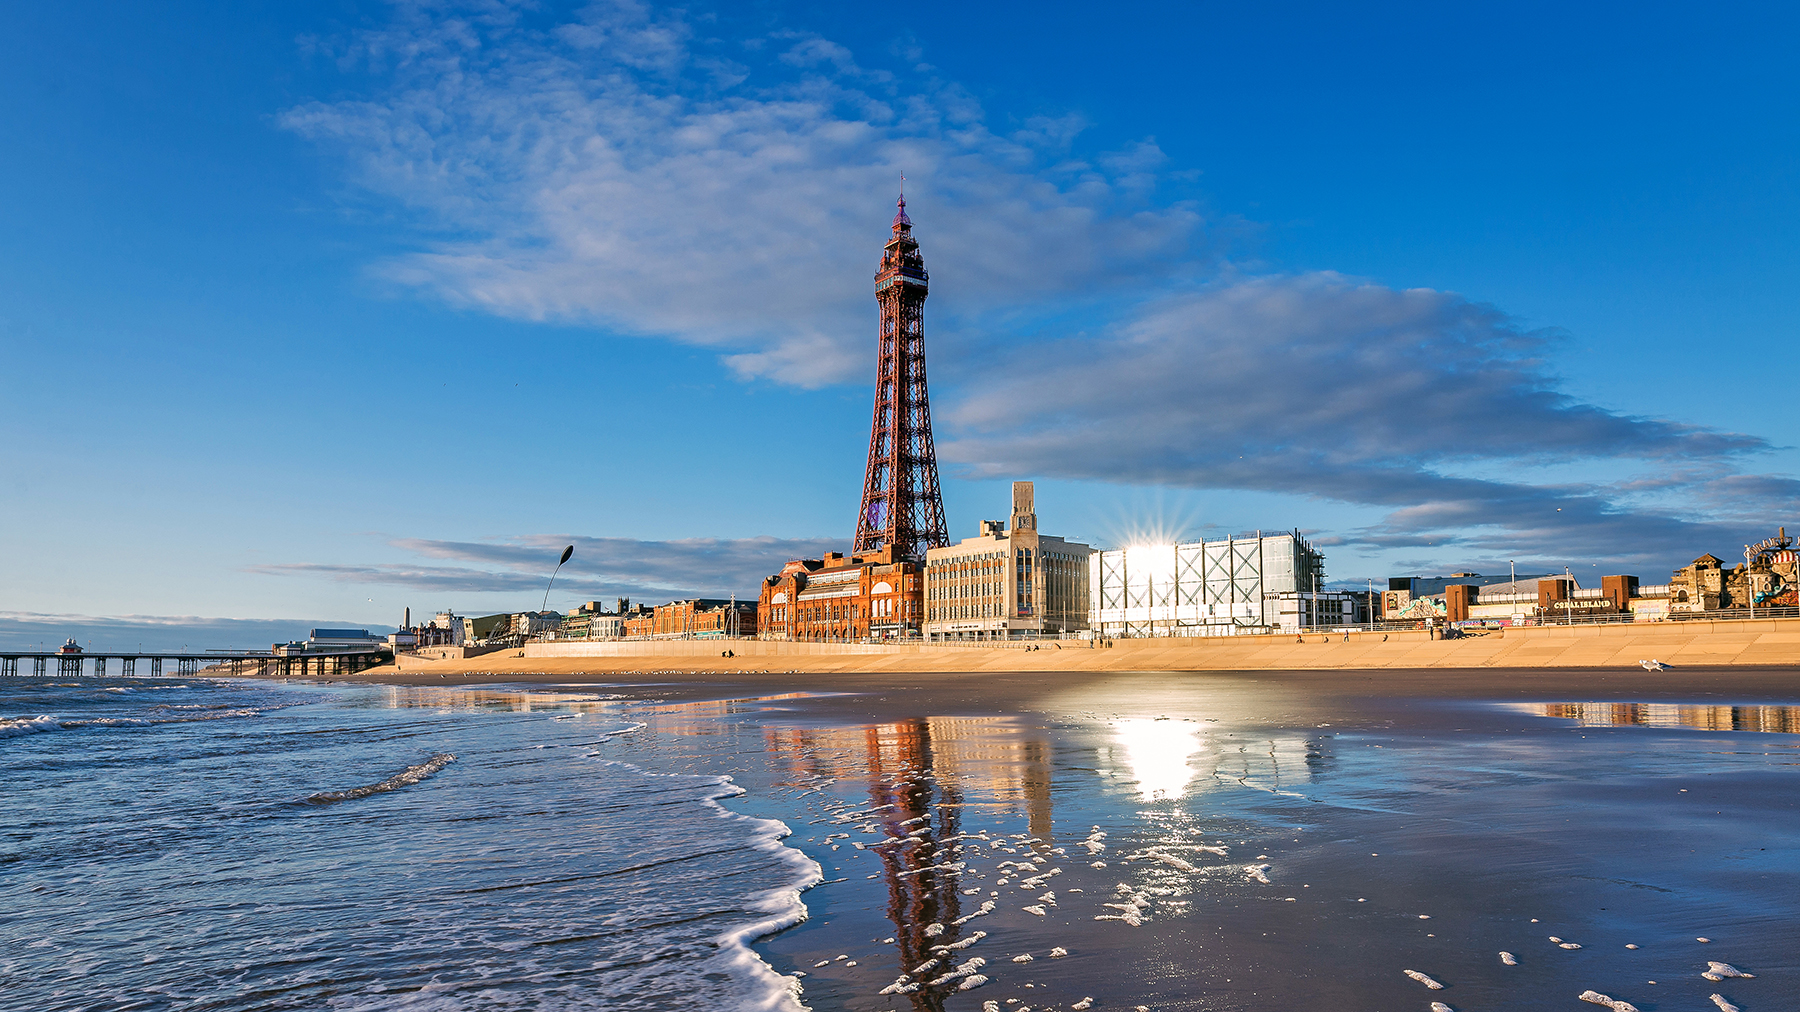 Blackpool tower and beach